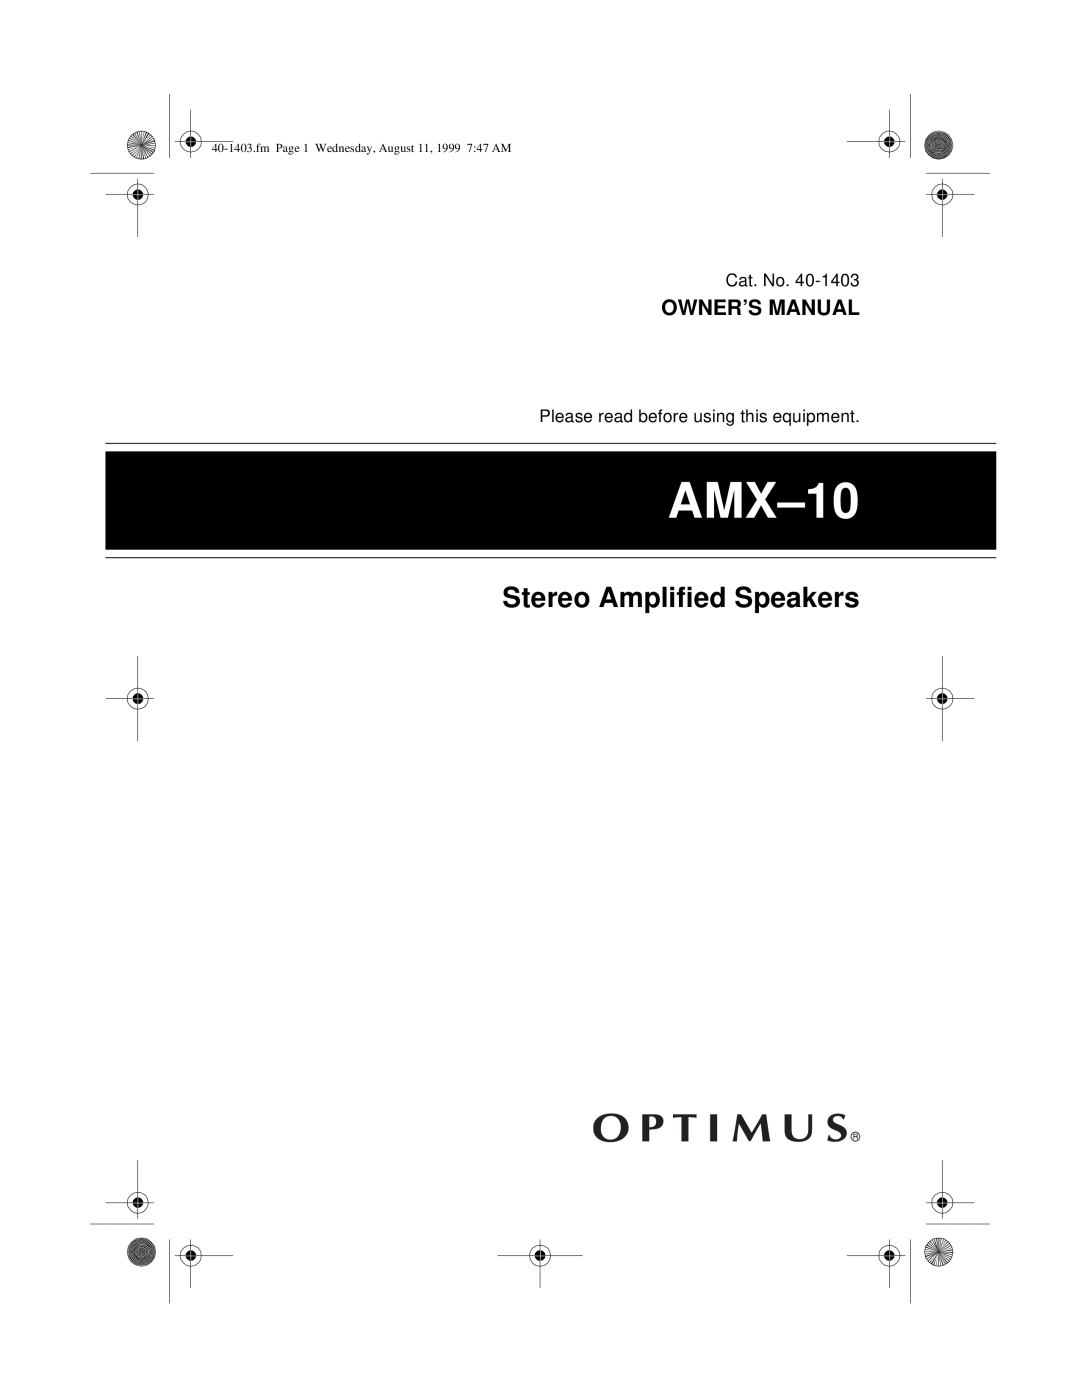 Optimus AMX-10, 40-1403 owner manual Stereo Amplified Speakers 